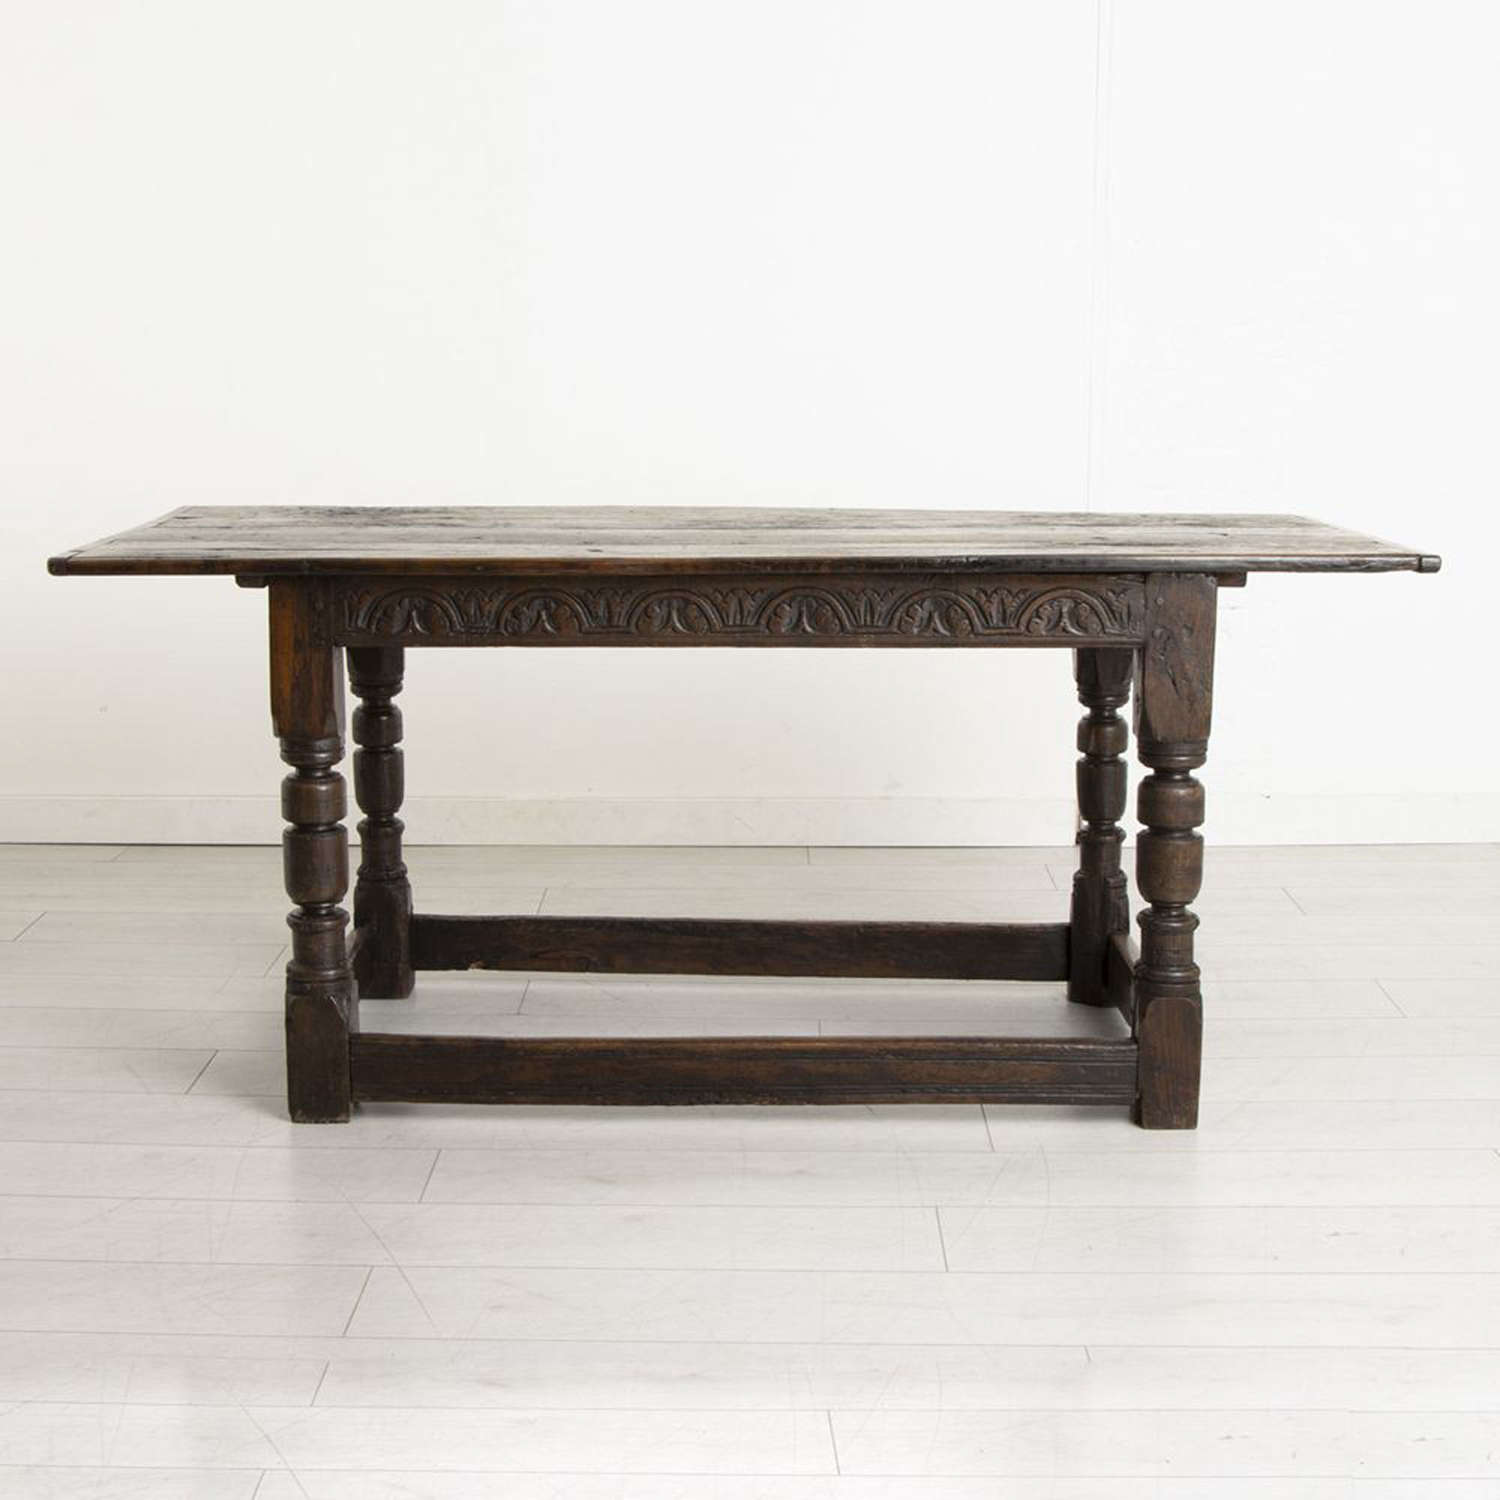 Antique English Oak Refectory Table c.1660